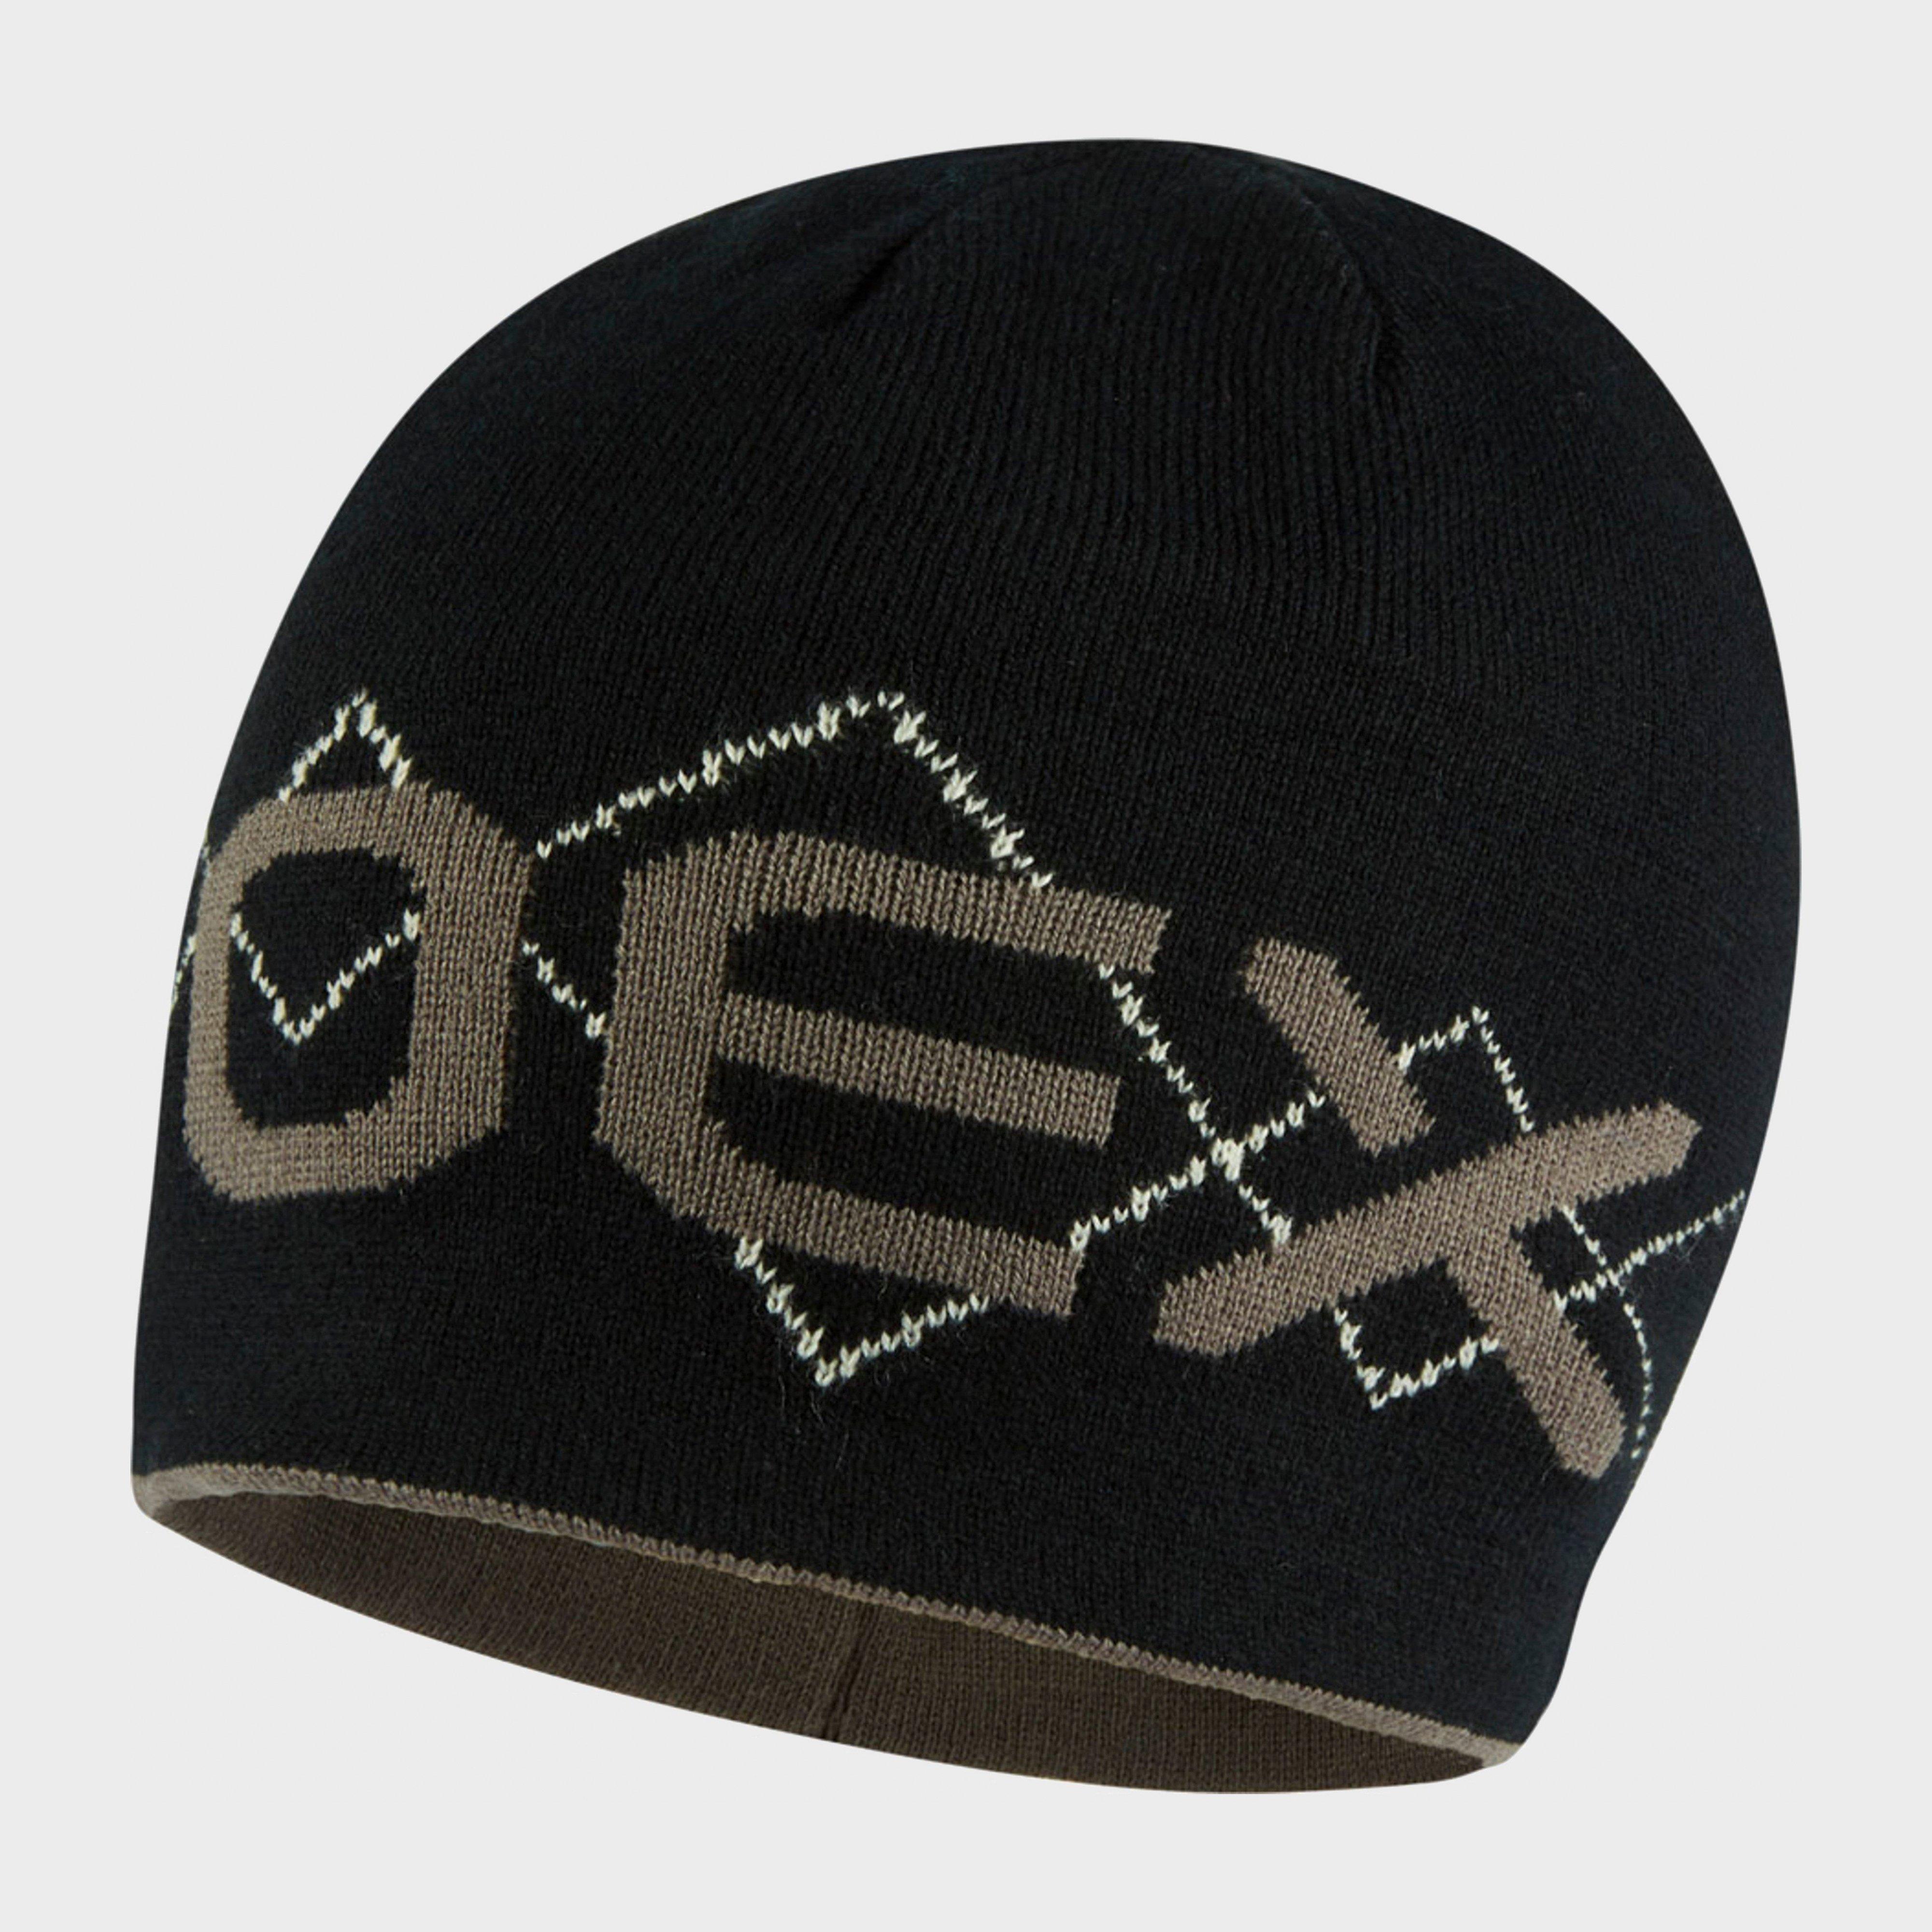 Oex Duplex Hat - Black/hat  Black/hat